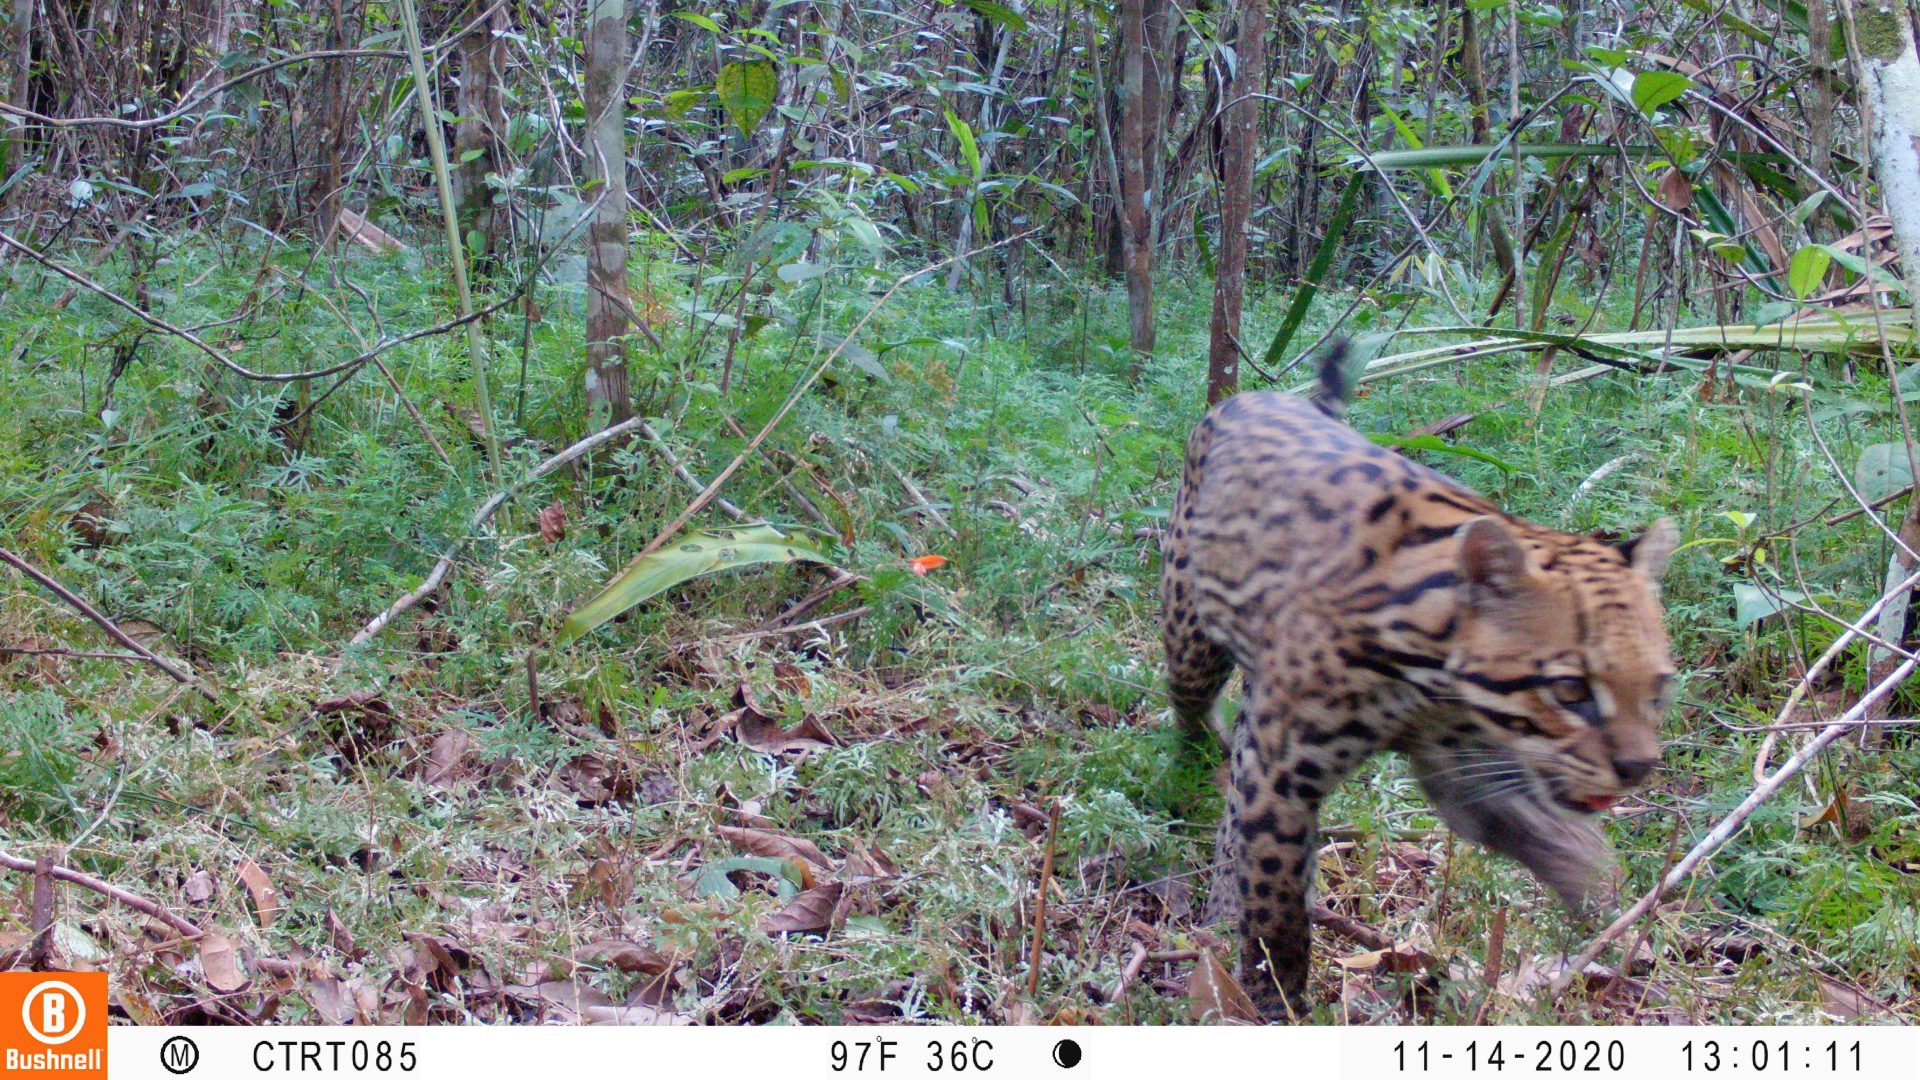 Ocelote. (Leopardus pardalis). Foto: Instituto Humboldt Colombia.